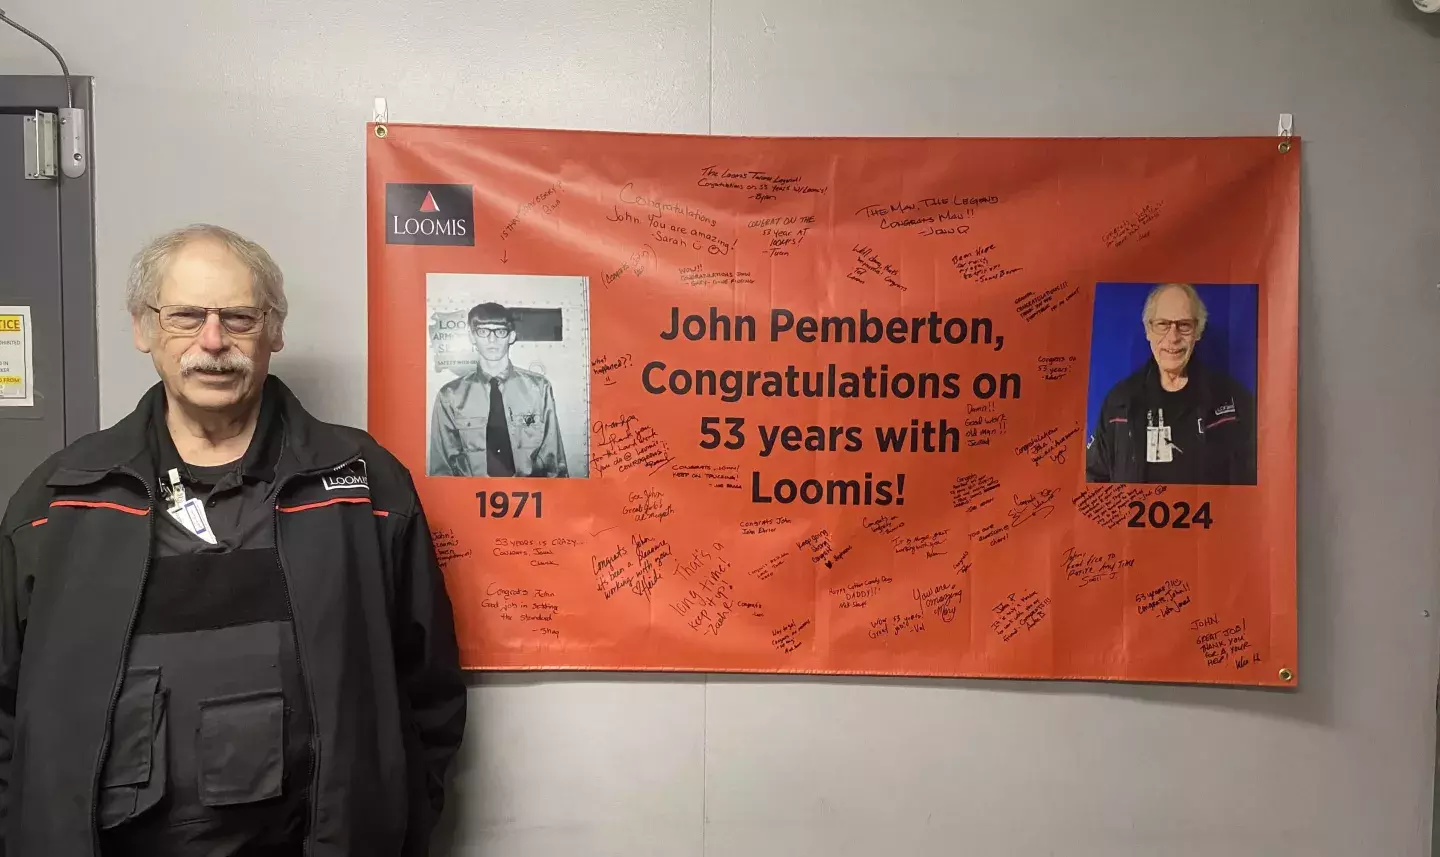 John Pemberton in front of a "congratulations" banner